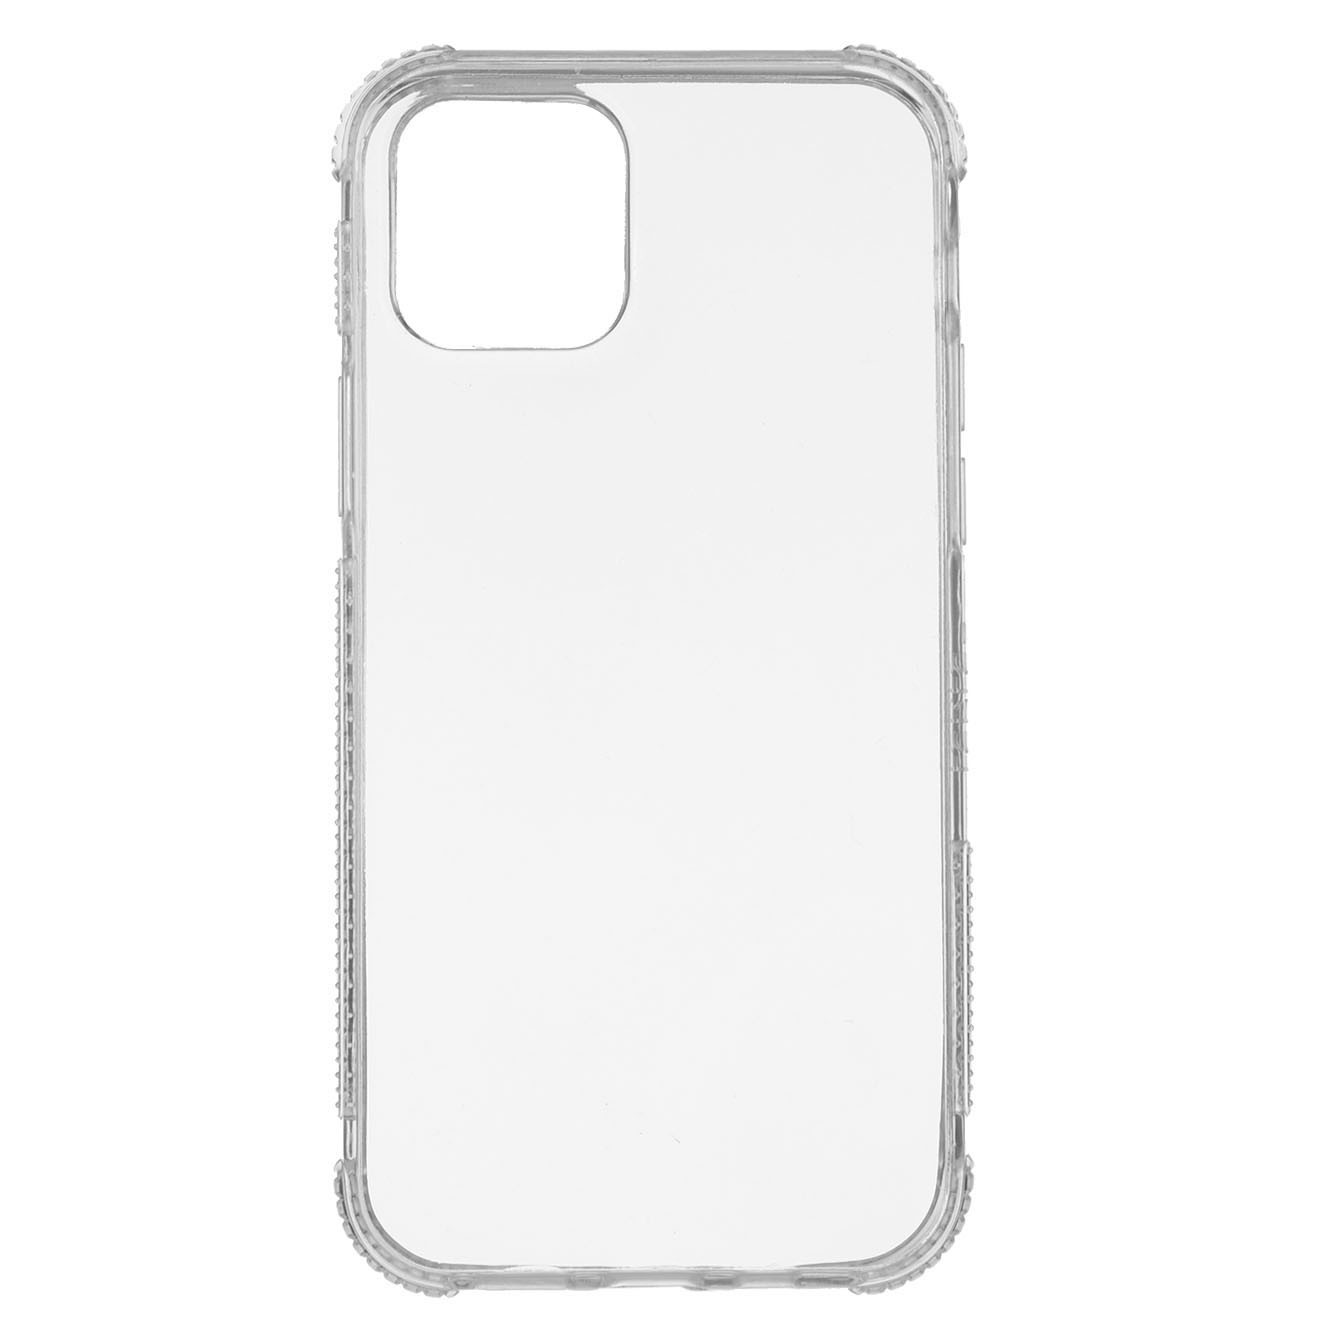 Carcasa Iphone 13 mini Transparente Antigolpe